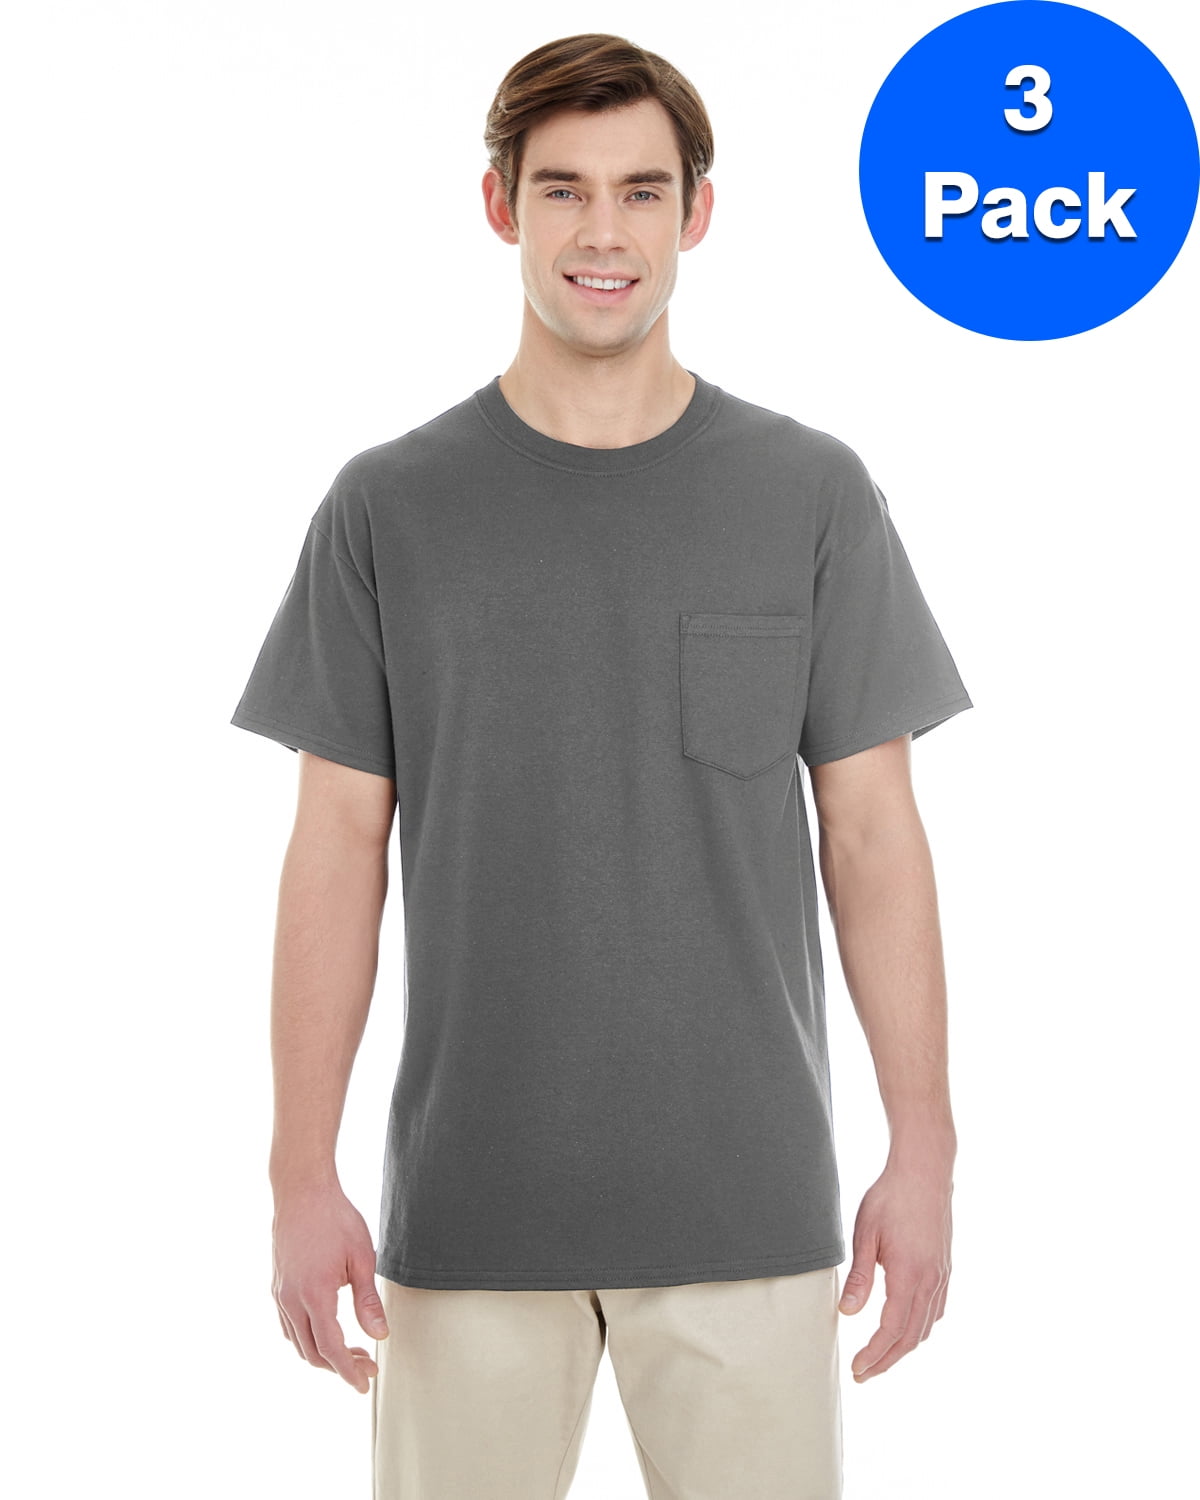 Mens Heavy Cotton T-Shirt with a Pocket 3 Pack - Walmart.com